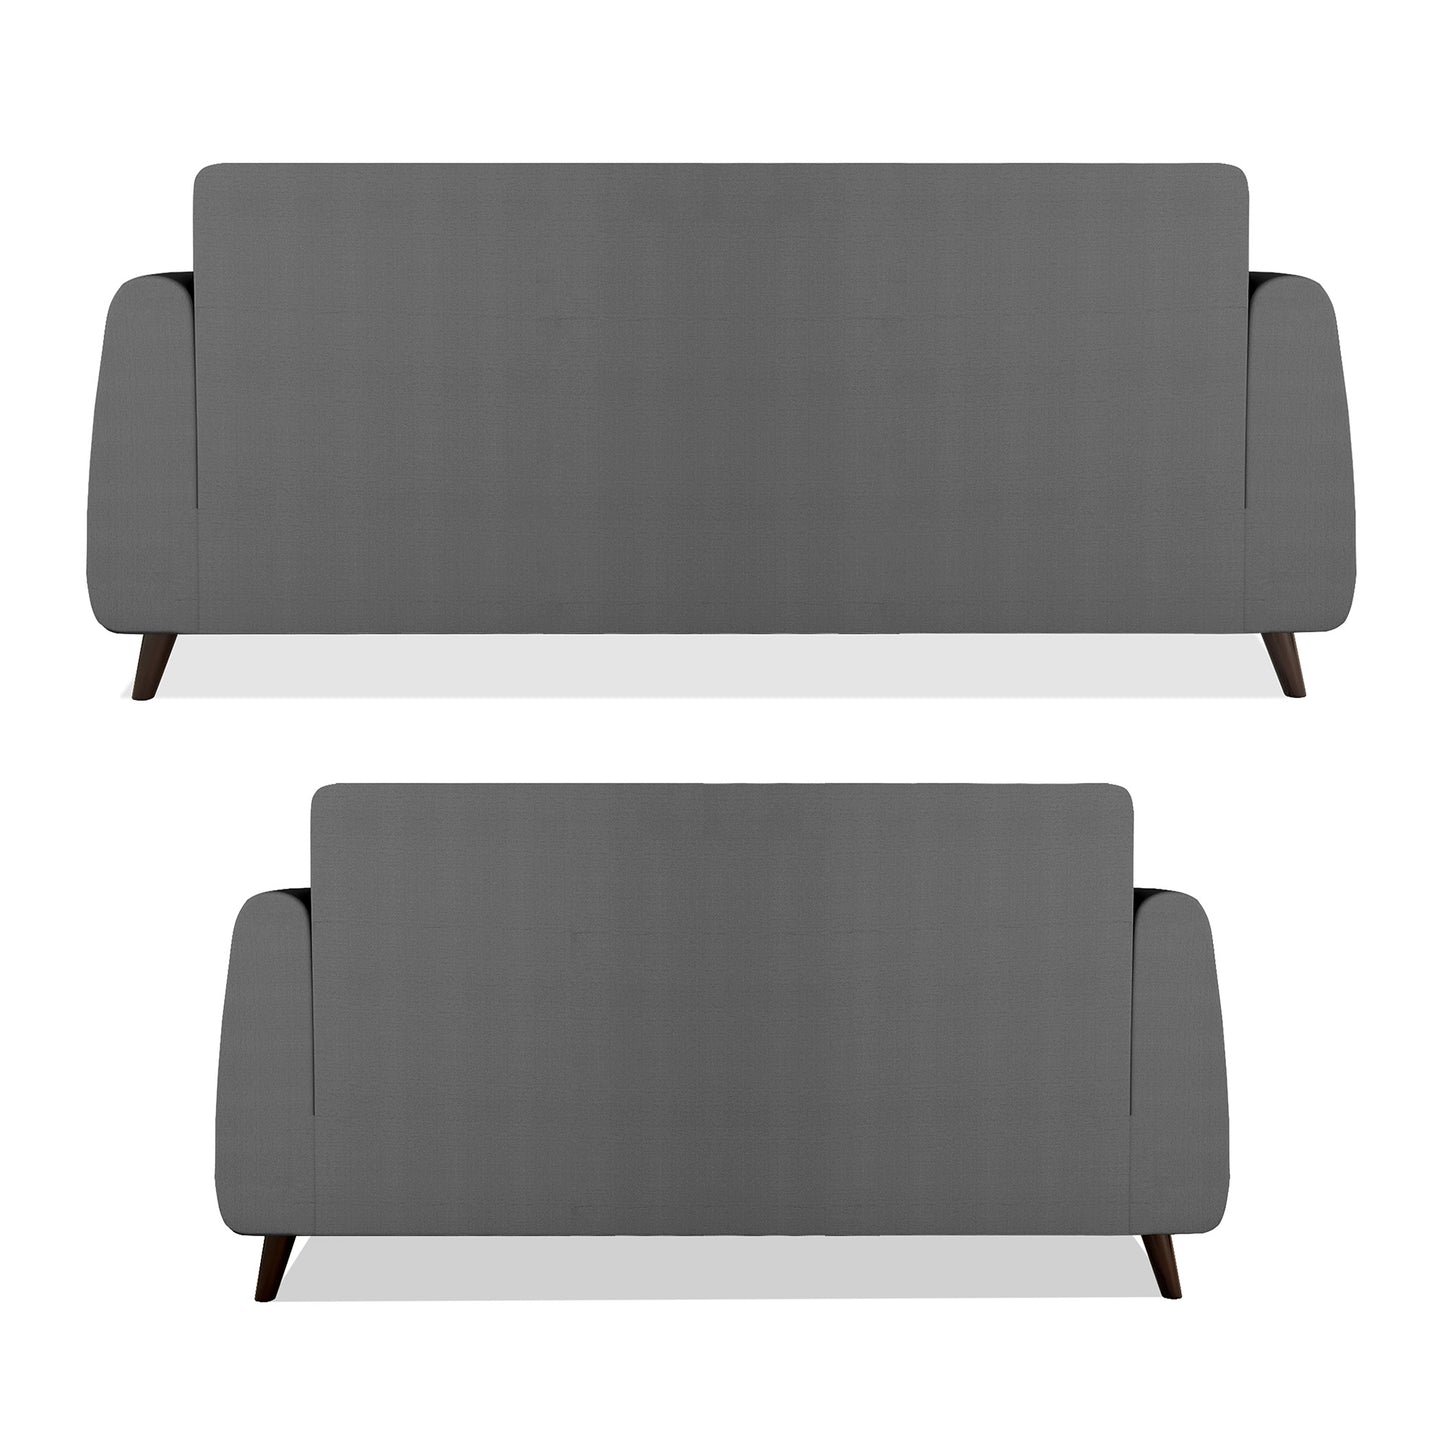 Adorn India Harlem 5 Seater 3+2 Fabric Sofa Set (Grey)